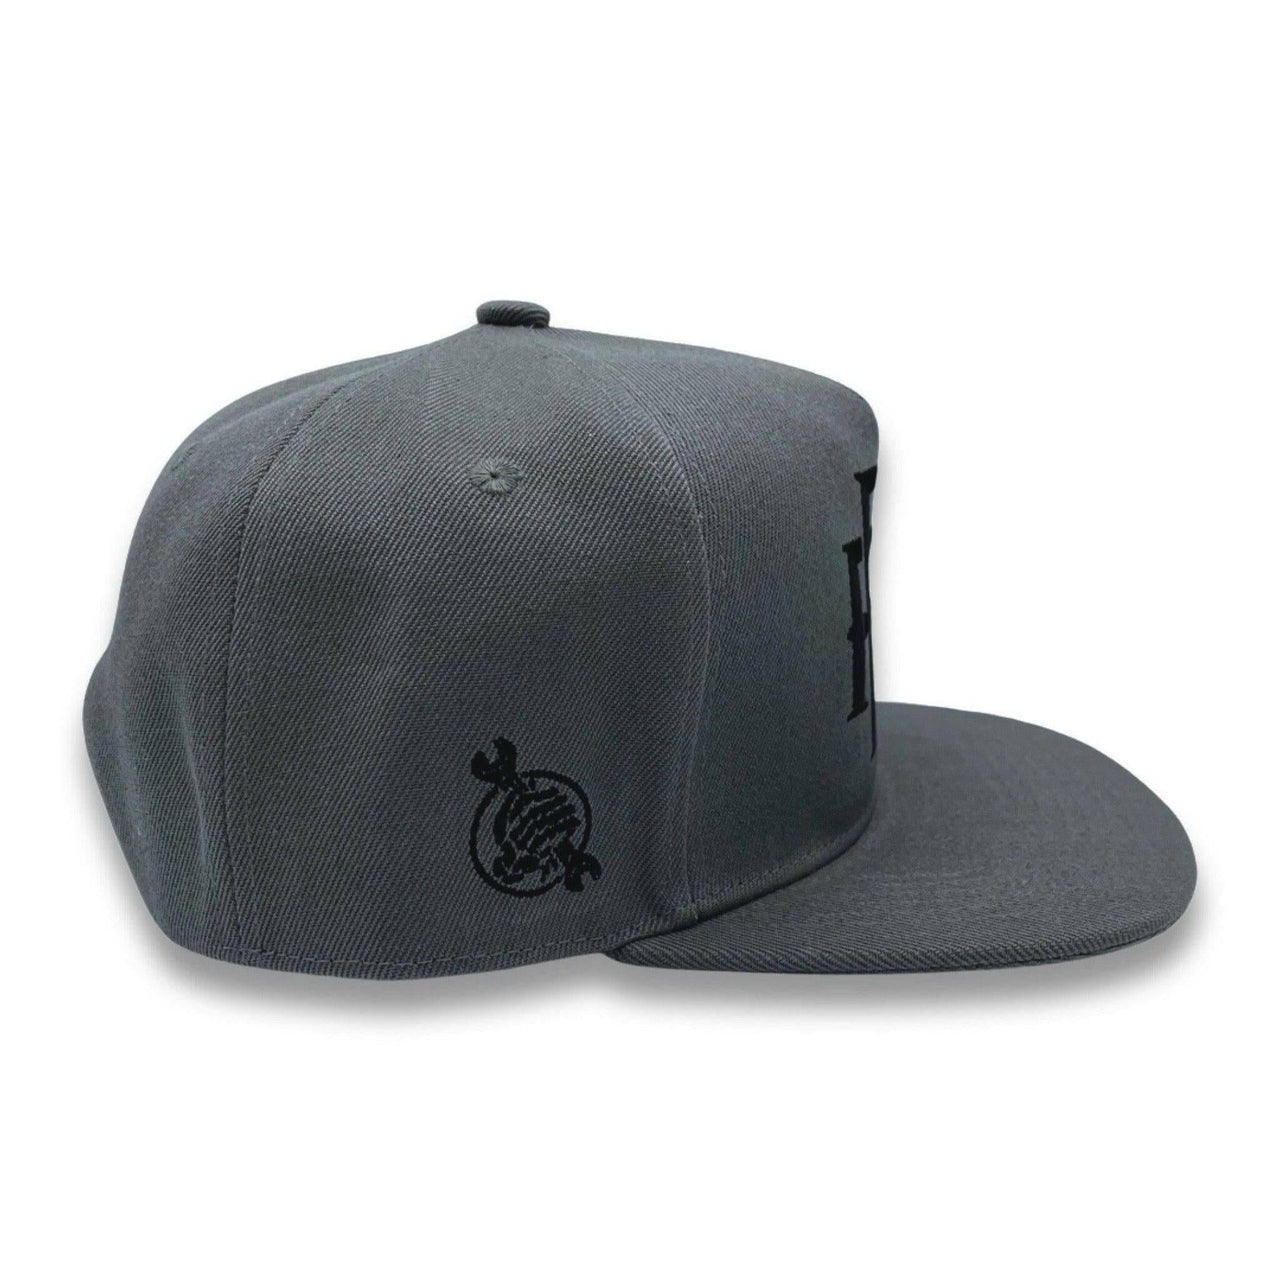 Grey & White Monogram Embroidered Snapback - Rebel Reaper Clothing Company Hats - Snapback